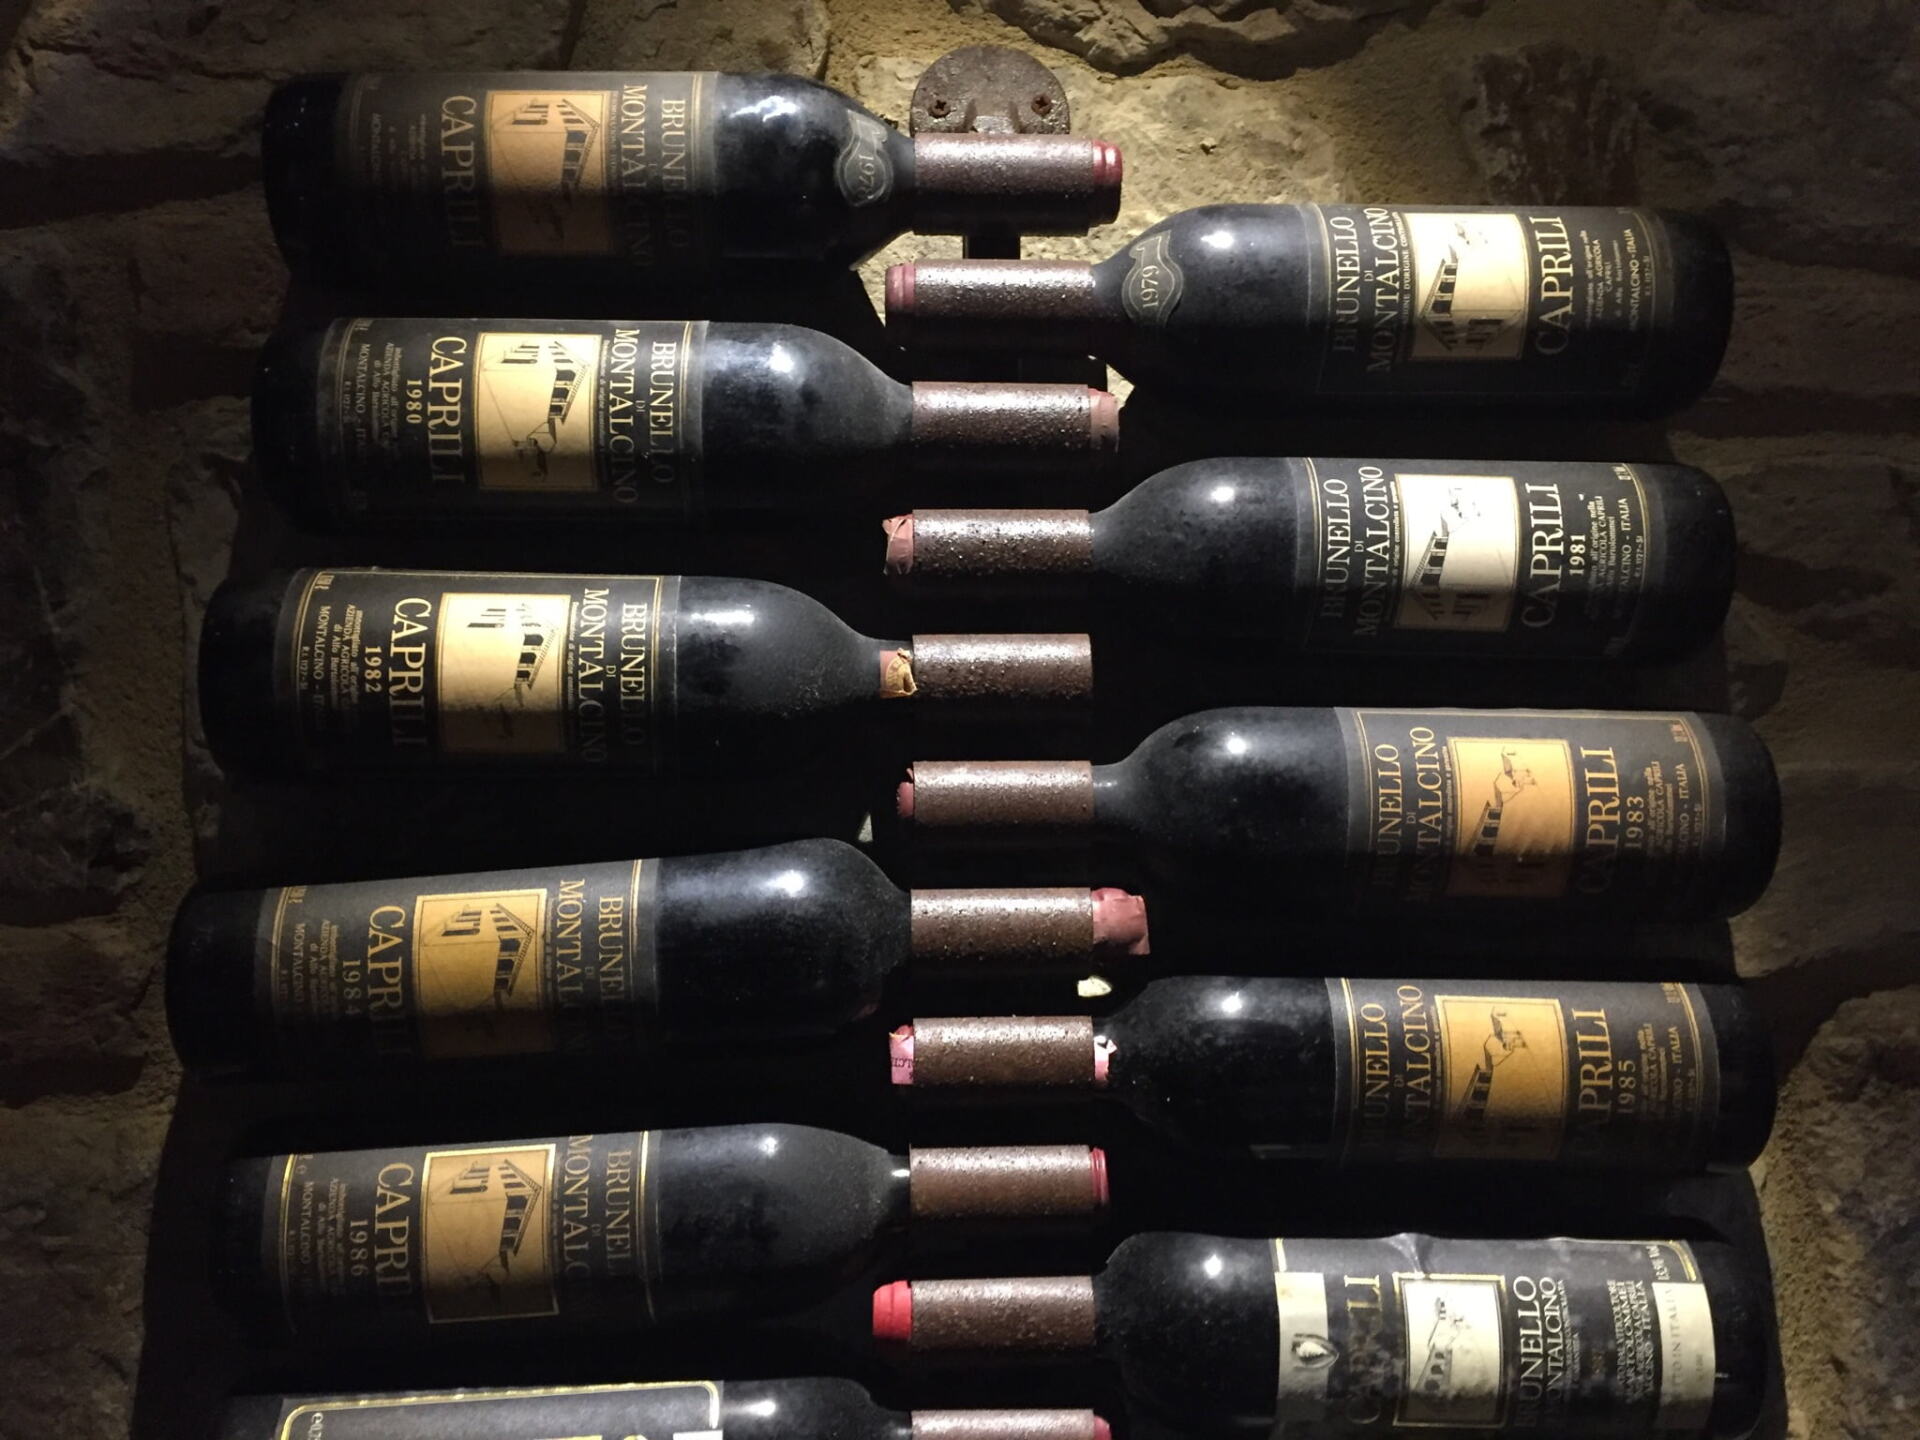 Caprili wine bottles